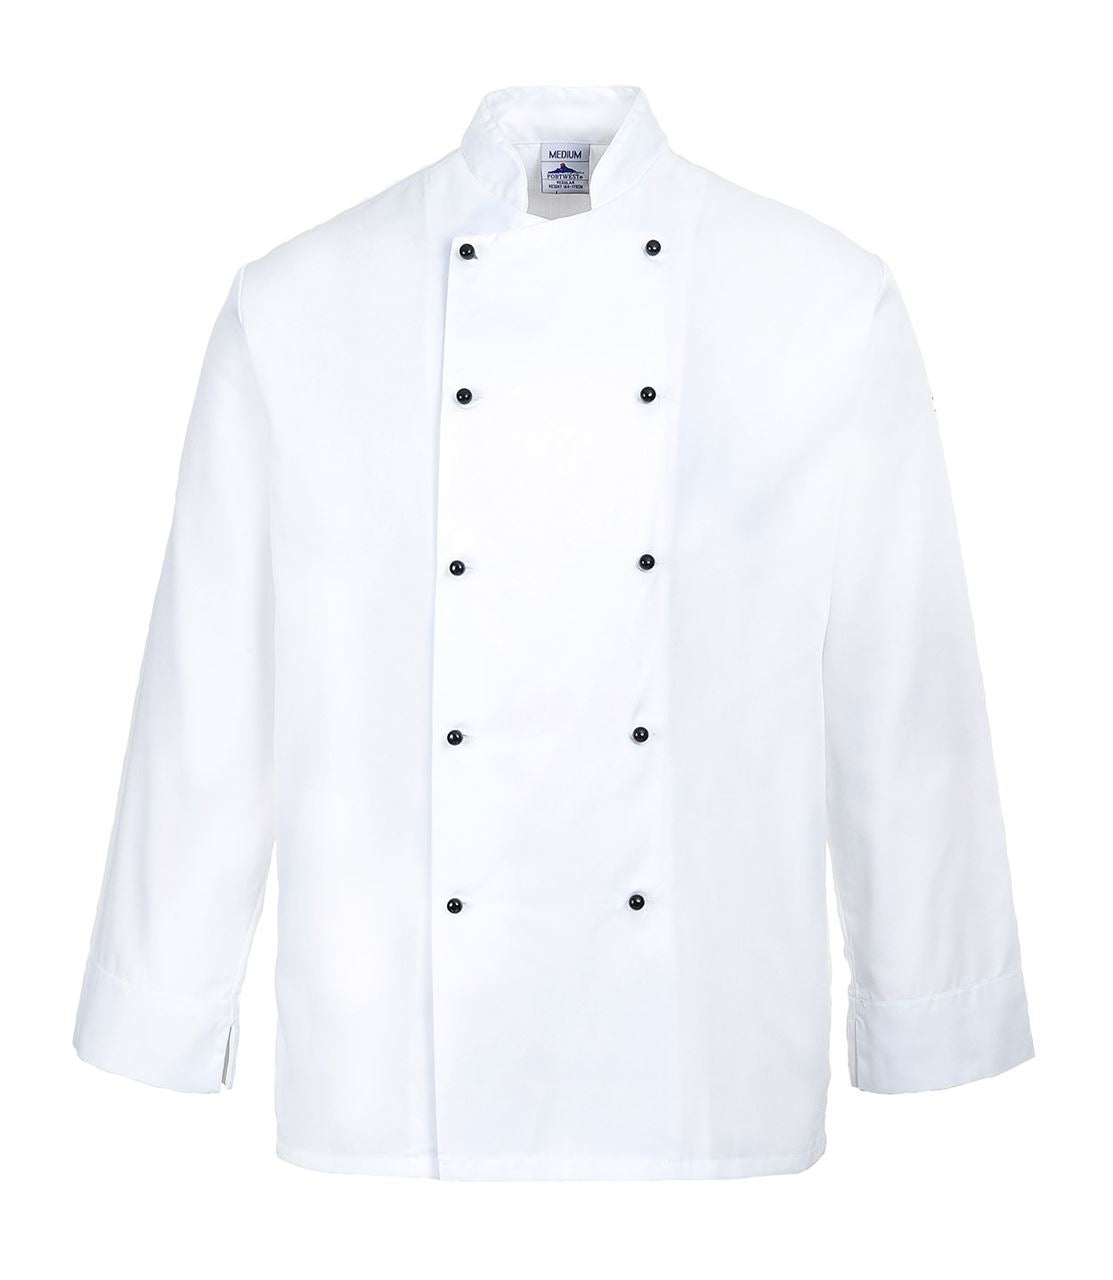 Portwest Anti-stain & Liquid Repellent Cornwall Teflon Chef Jacket C831 White